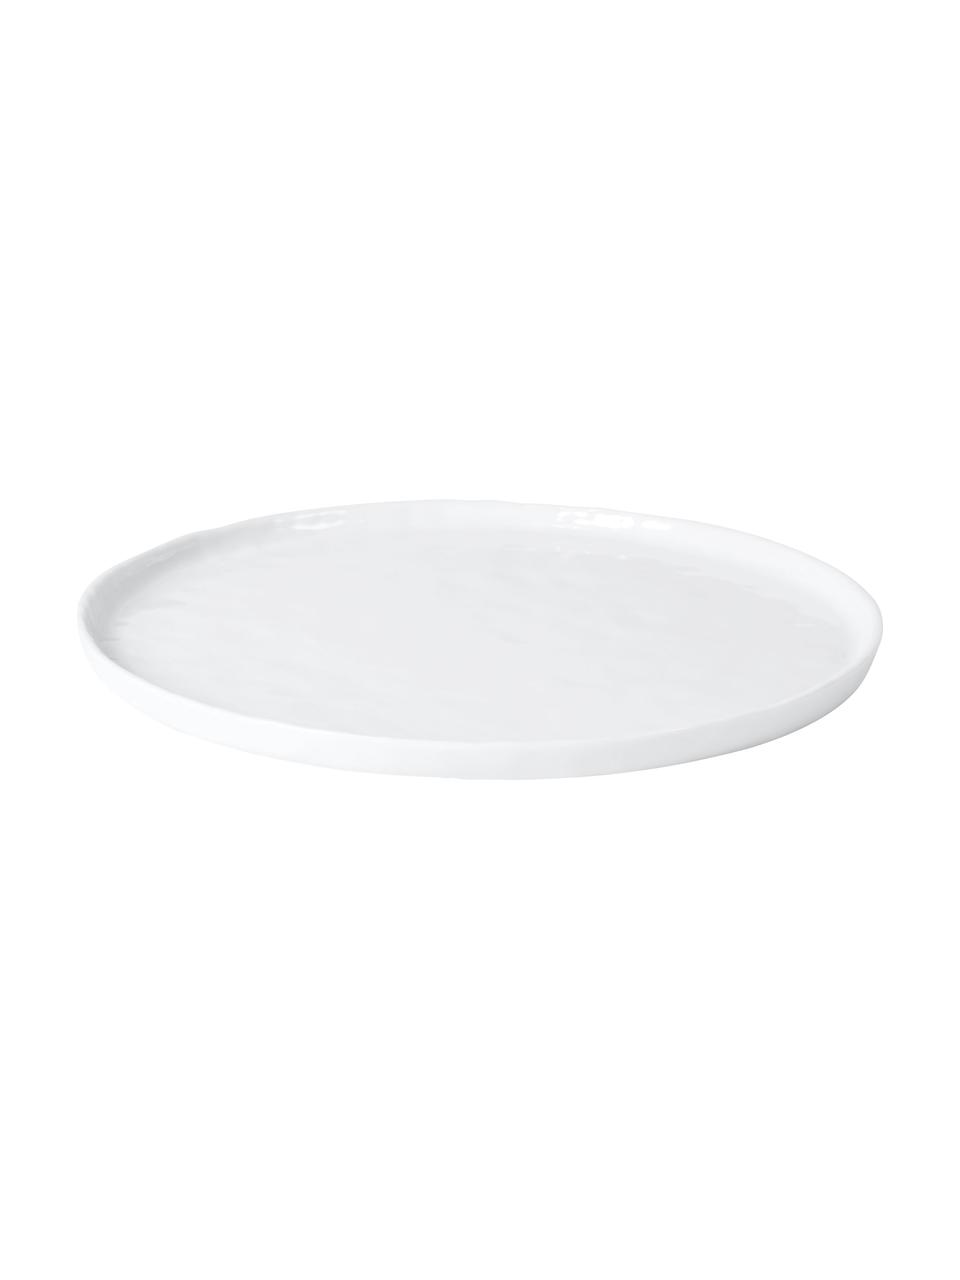 Dinerborden Porcelino, 4 stuks, Porselein, Wit, Ø 27 cm